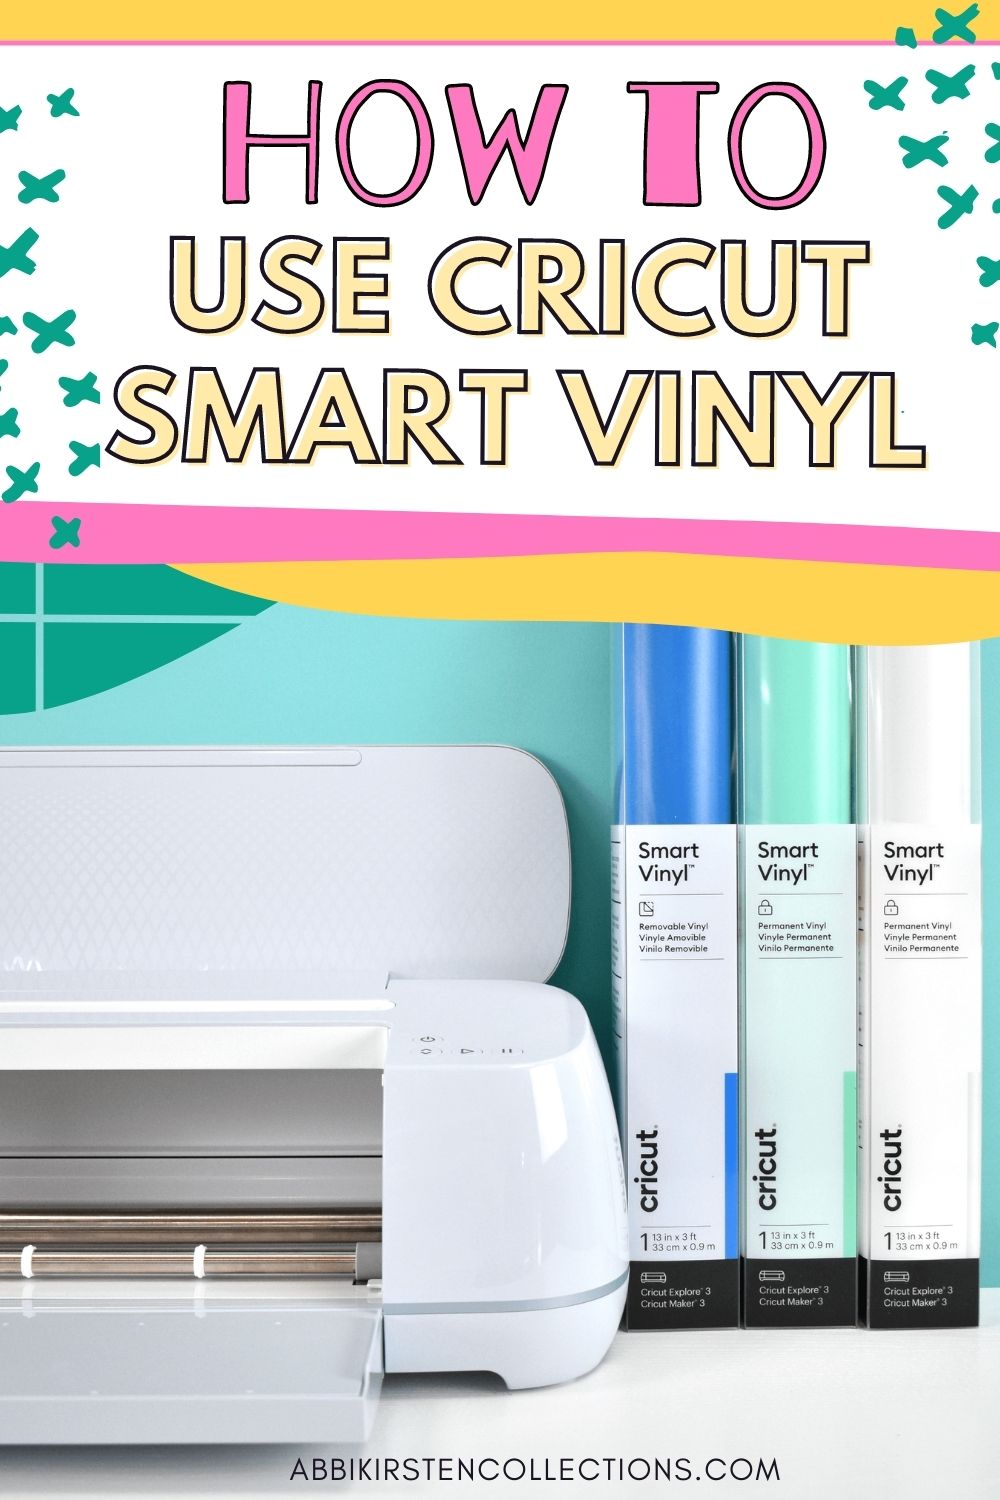 Cricut Maker 3 And Explore 3 Smart Vinyl Tutorial Story - Abbi Kirsten  Collections